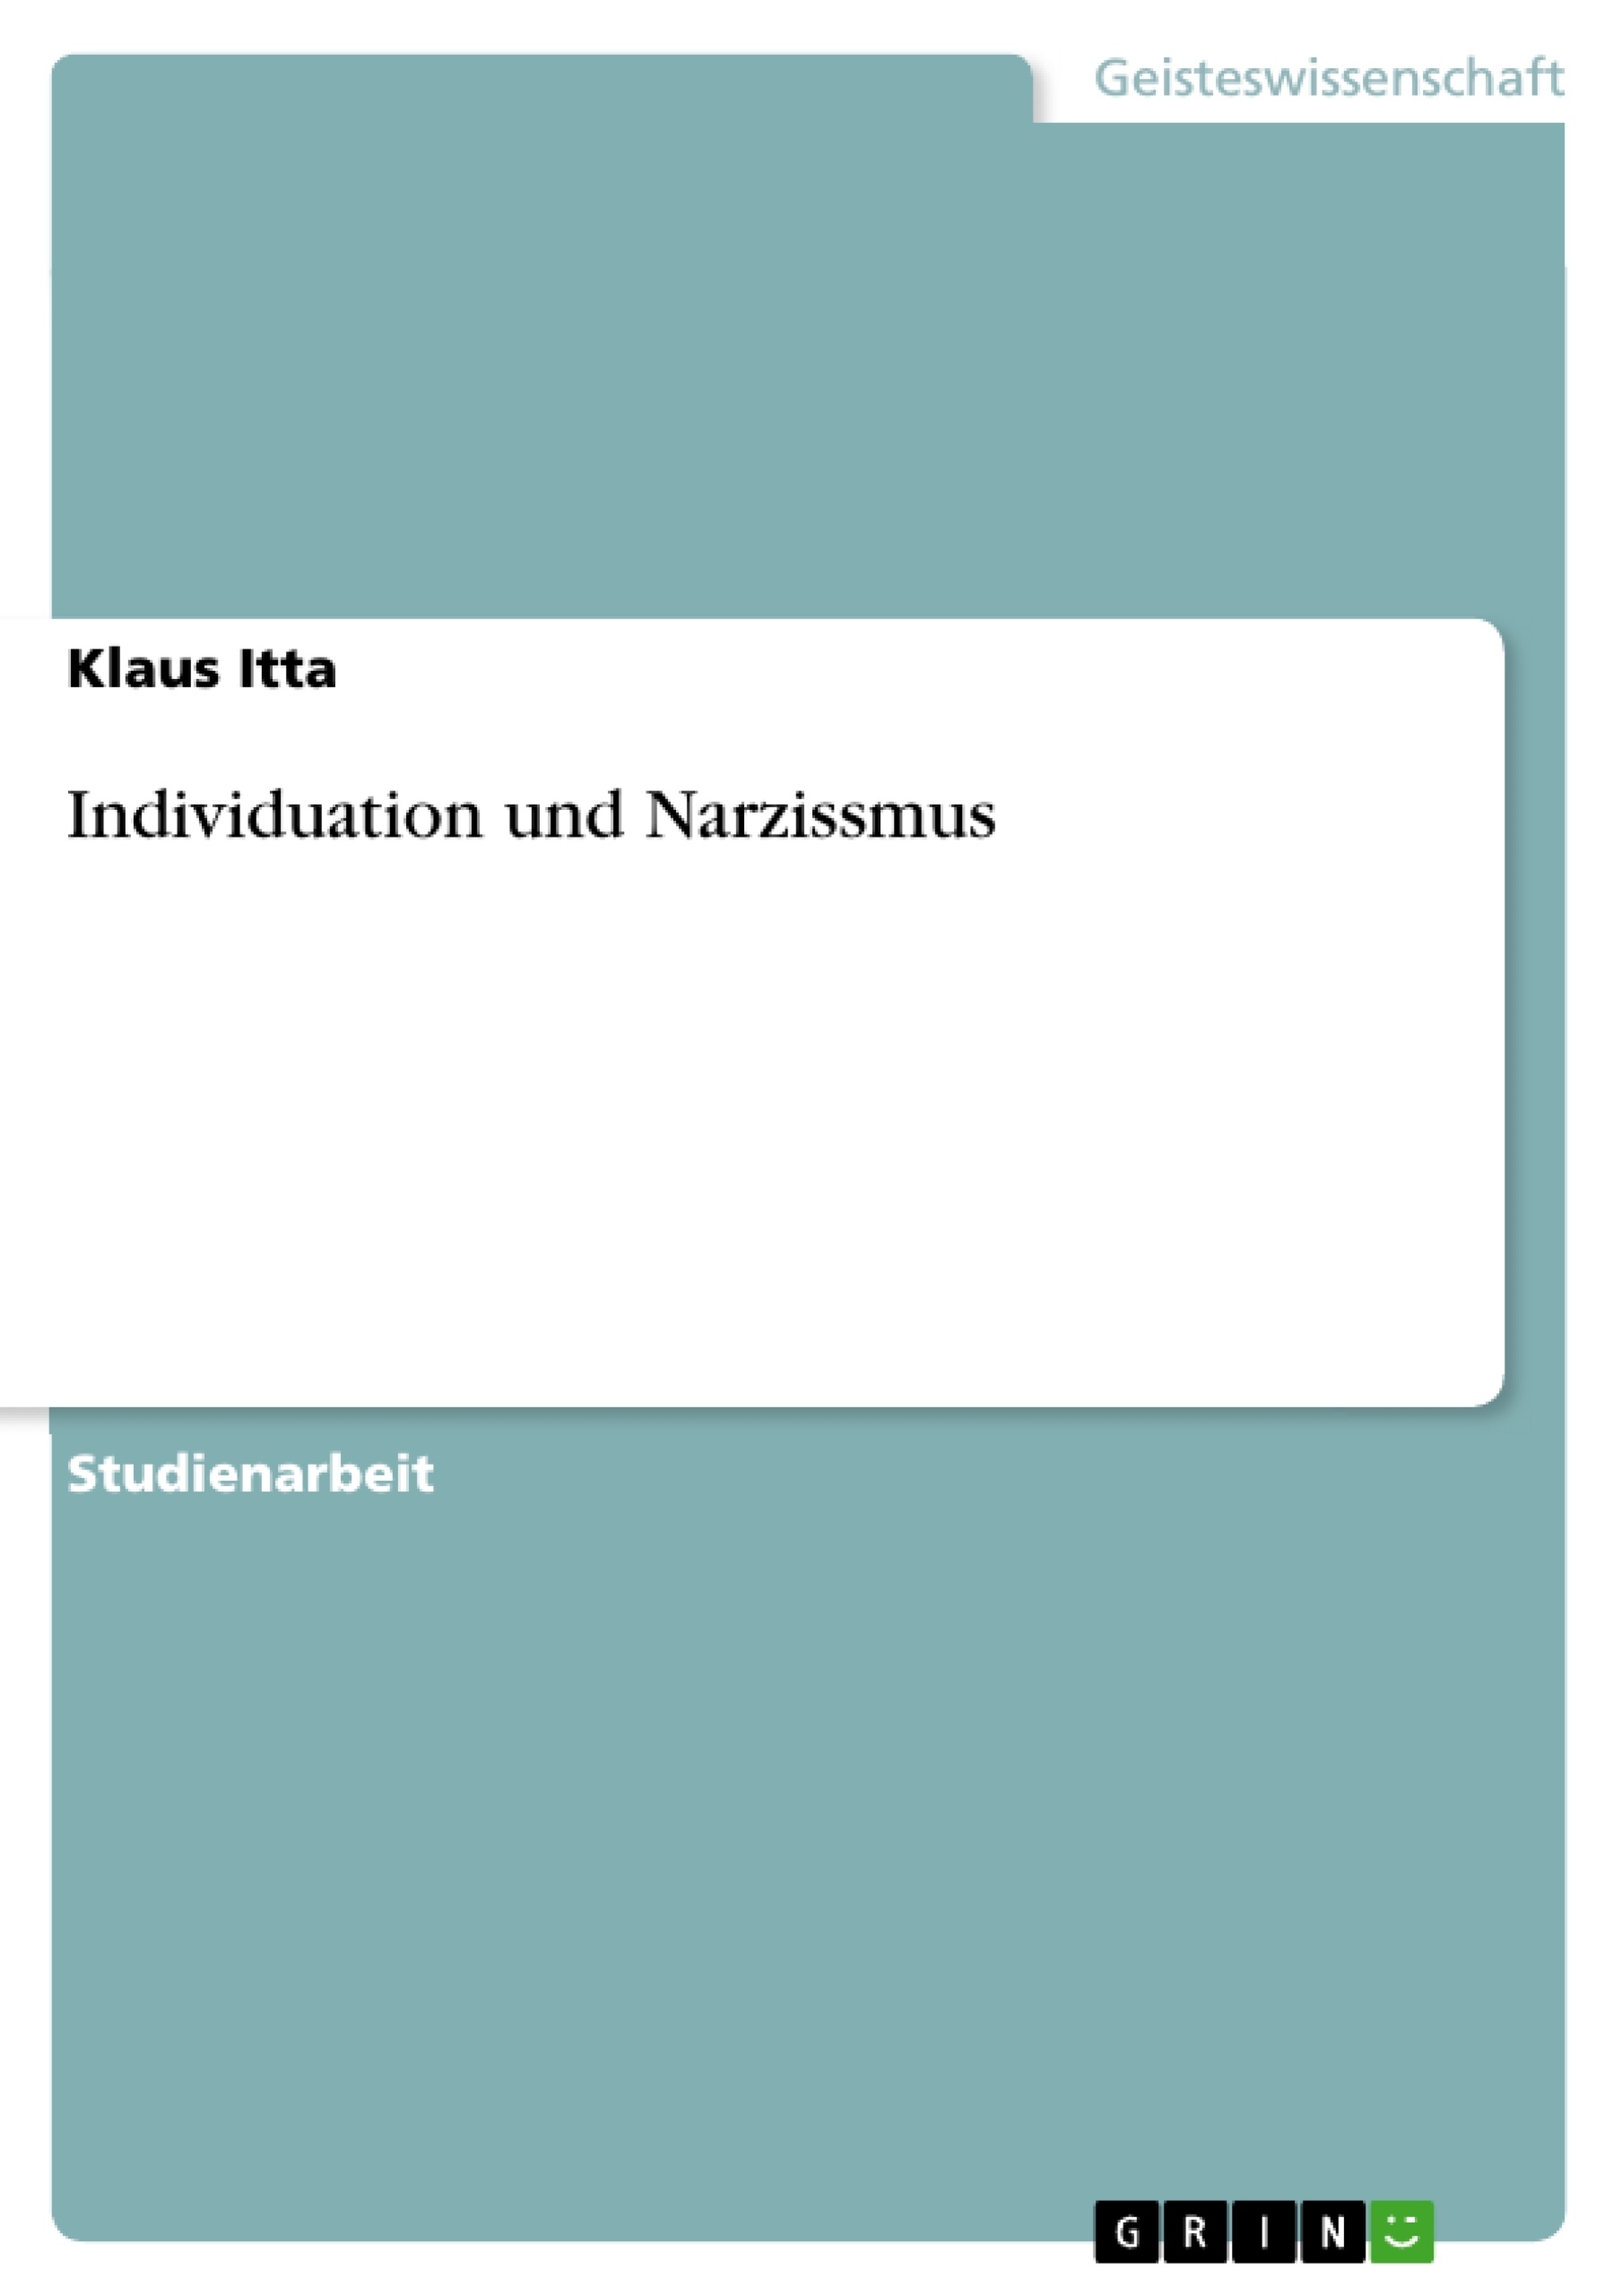 Título: Individuation und Narzissmus